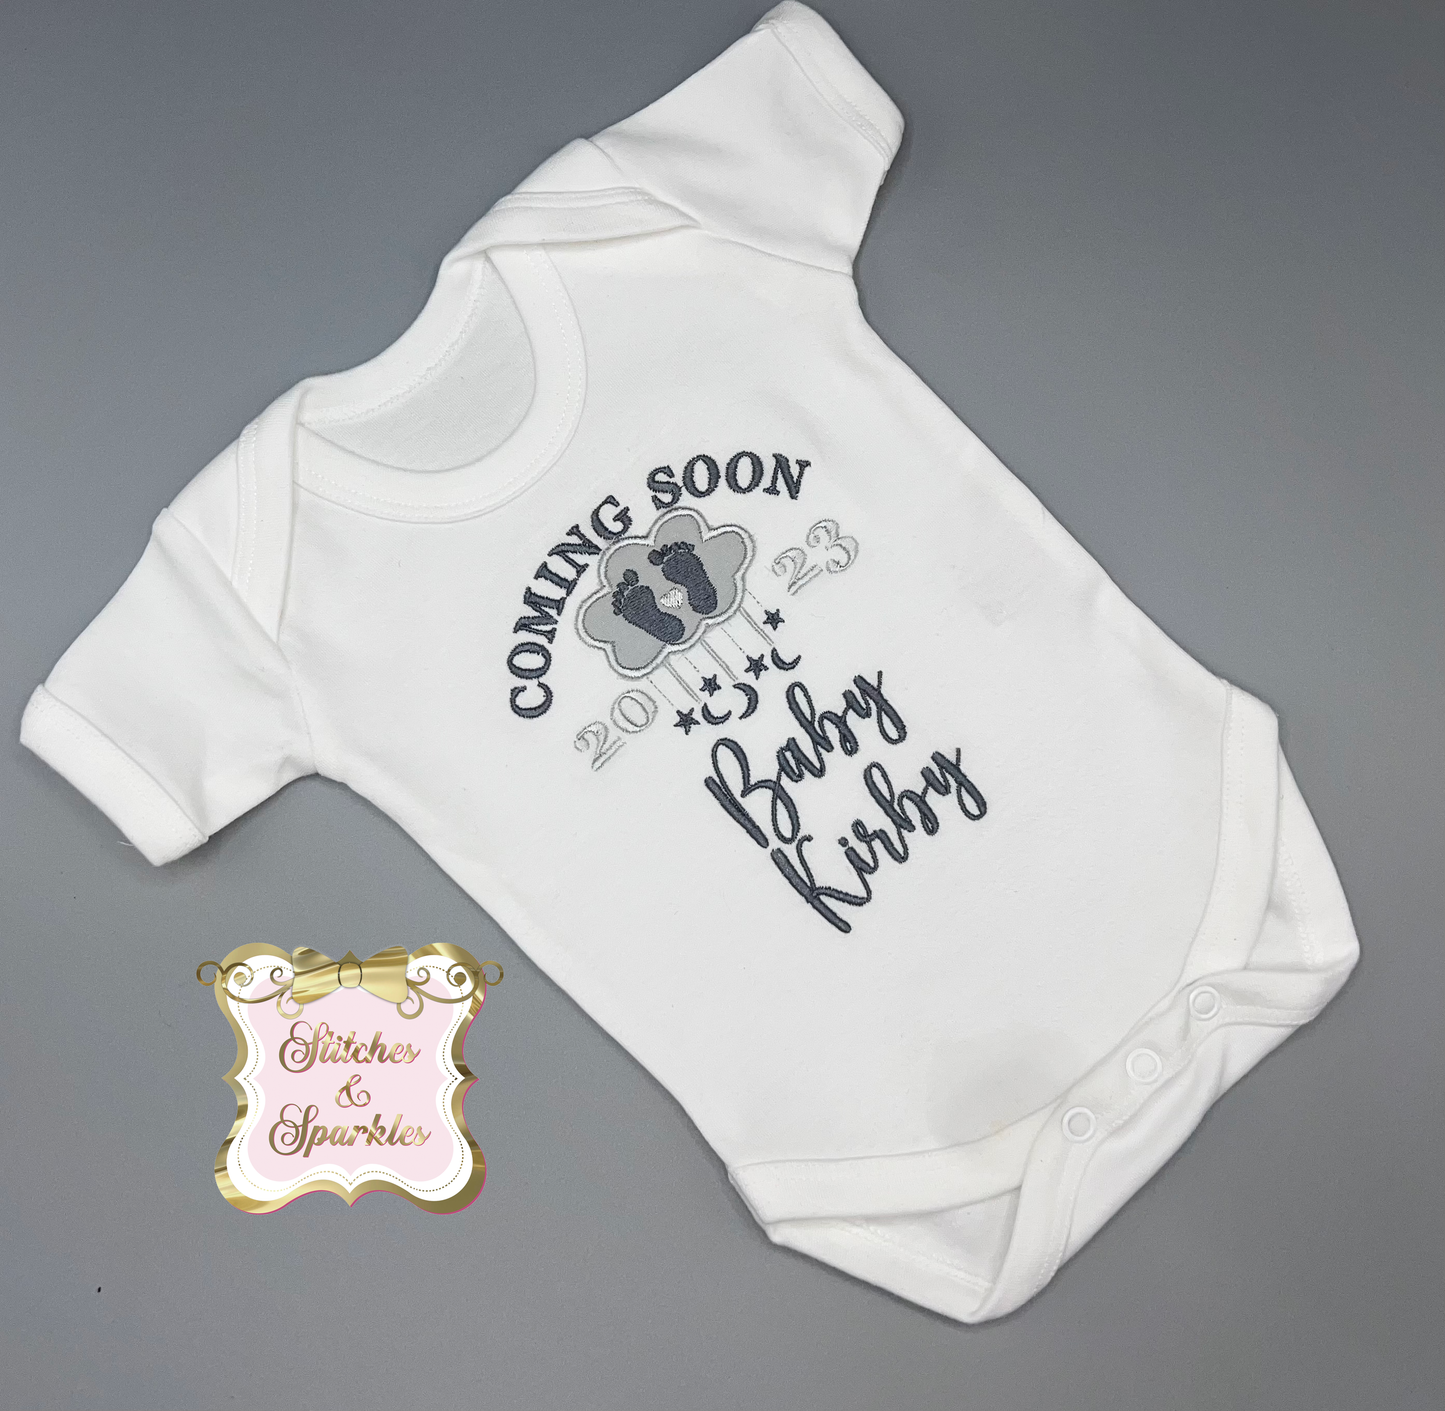 Embroidered Pregnancy Baby Announcment Cloud Vest